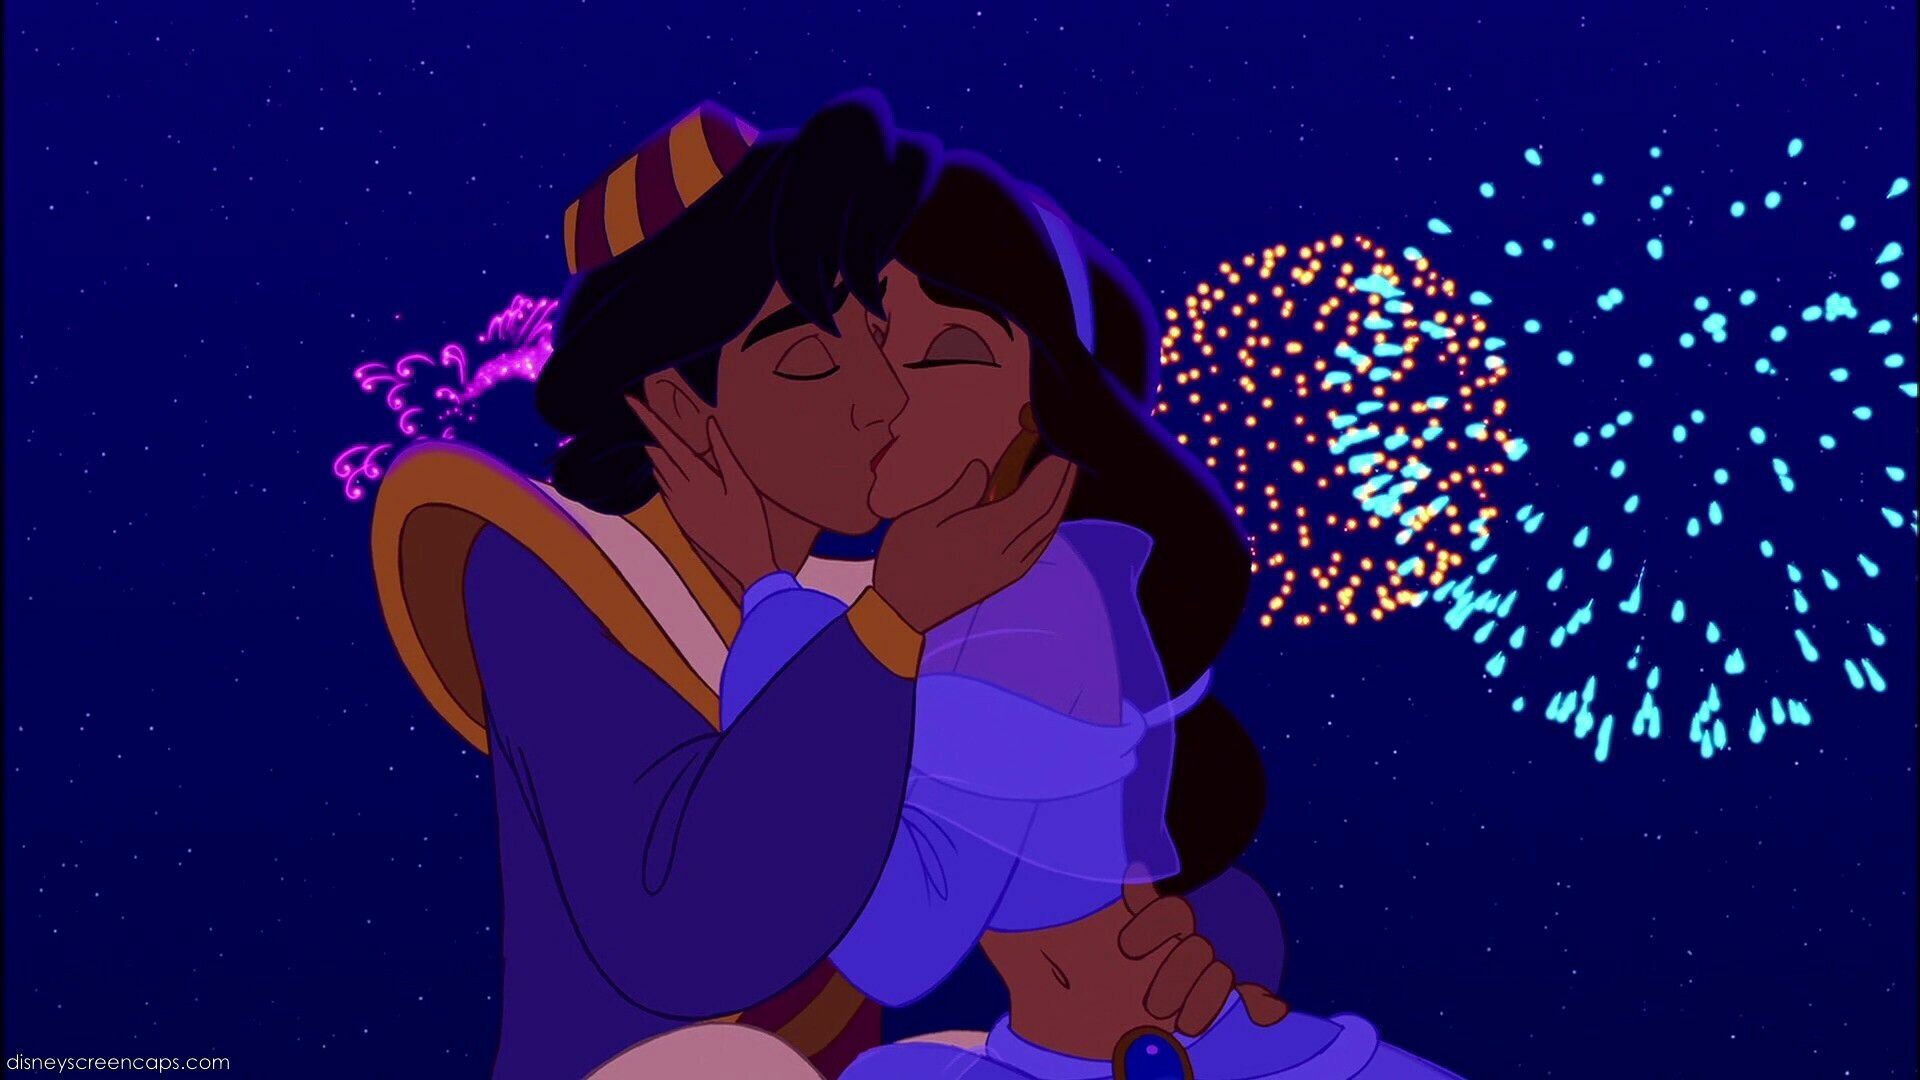 Aladdin (Cartoon): One of the great films of the Disney Renaissance Era. 1920x1080 Full HD Background.